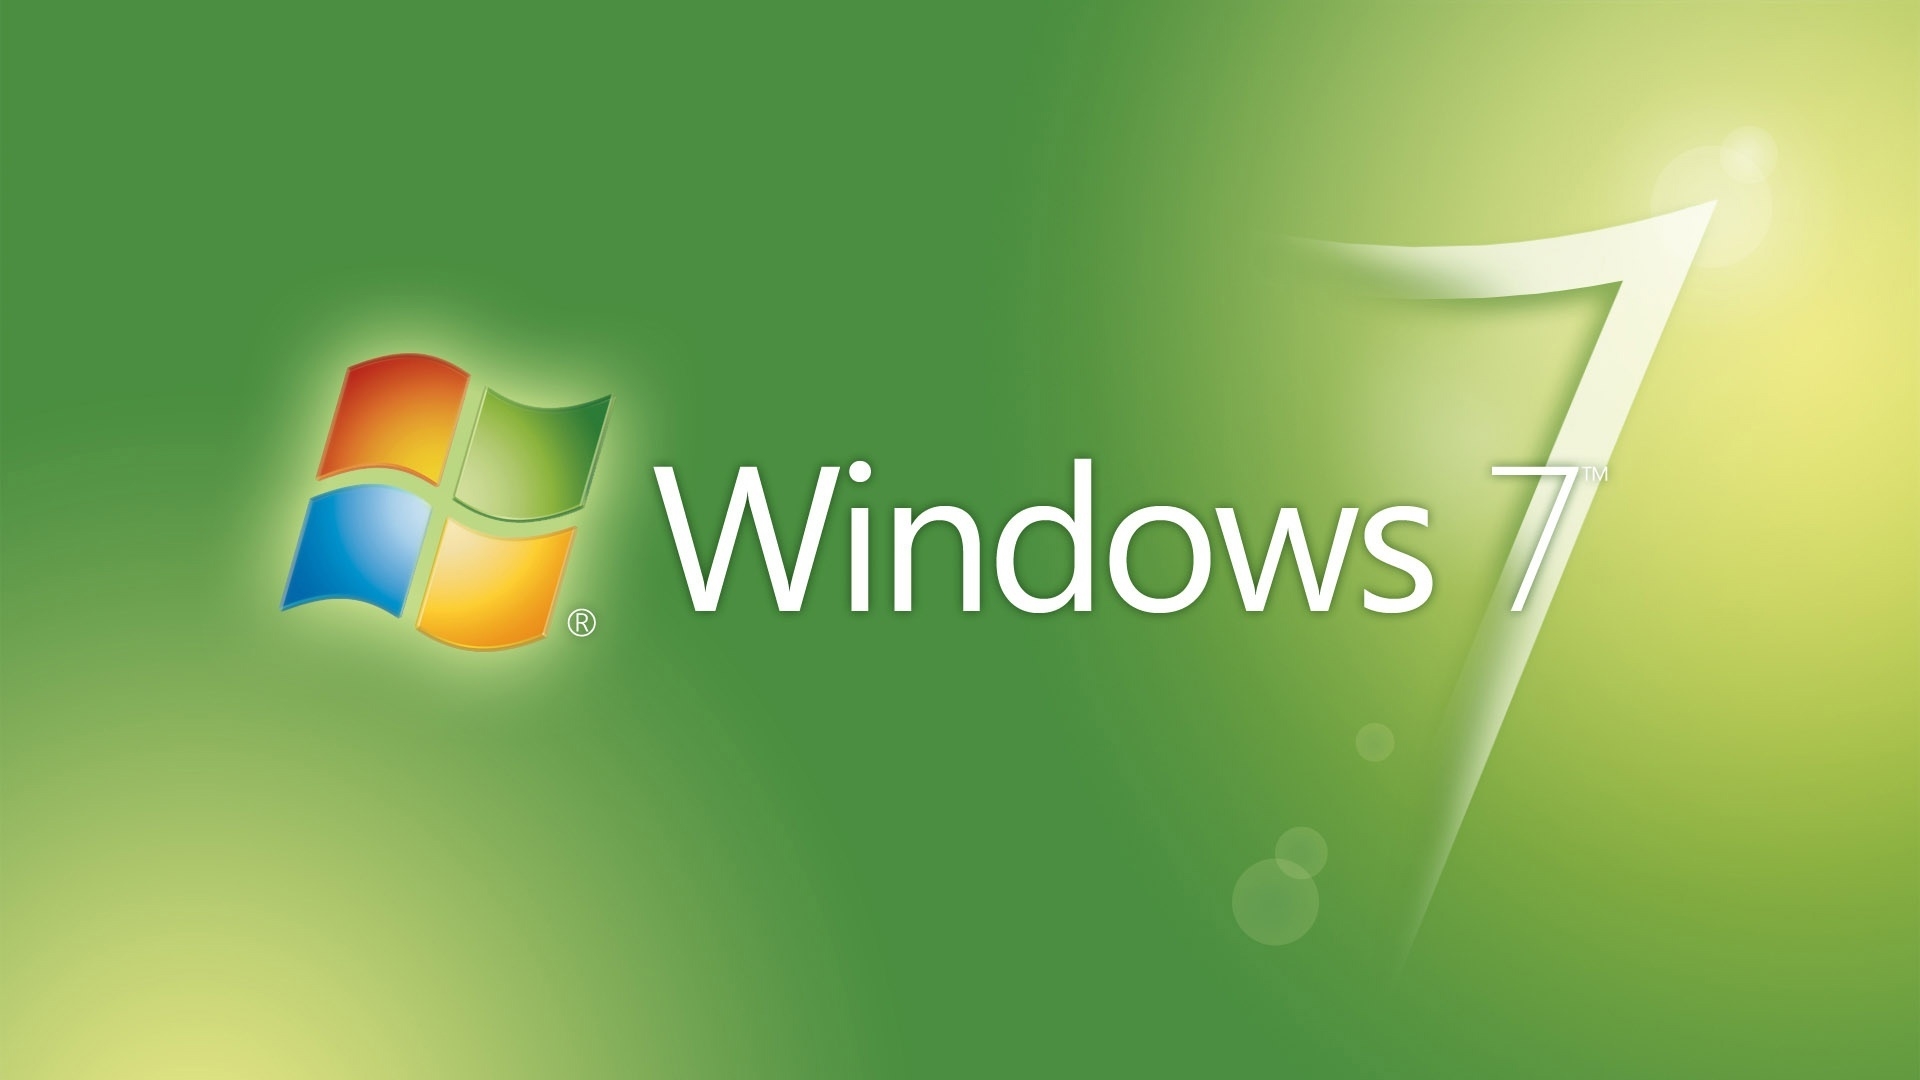 Windows 7 Green for 1920 x 1080 HDTV 1080p resolution